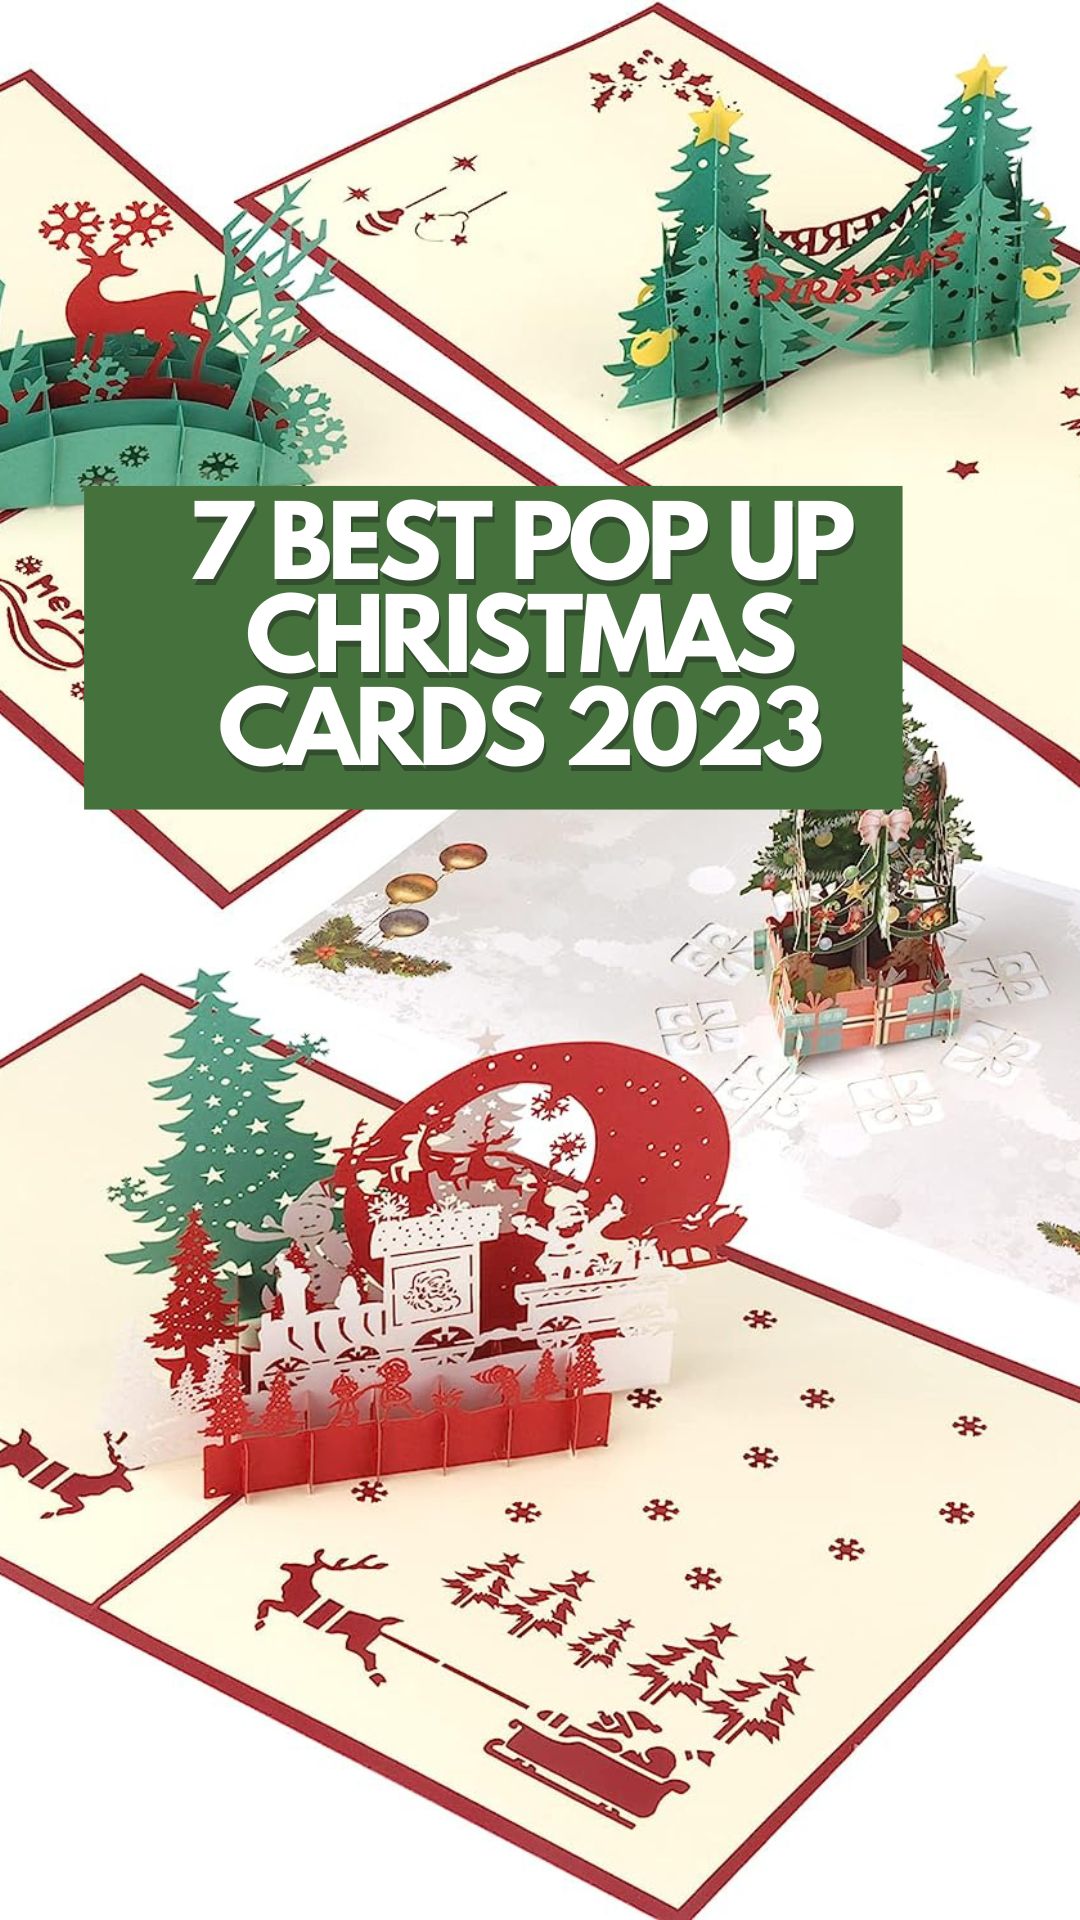 7 Best Pop Up Christmas Cards 2023 